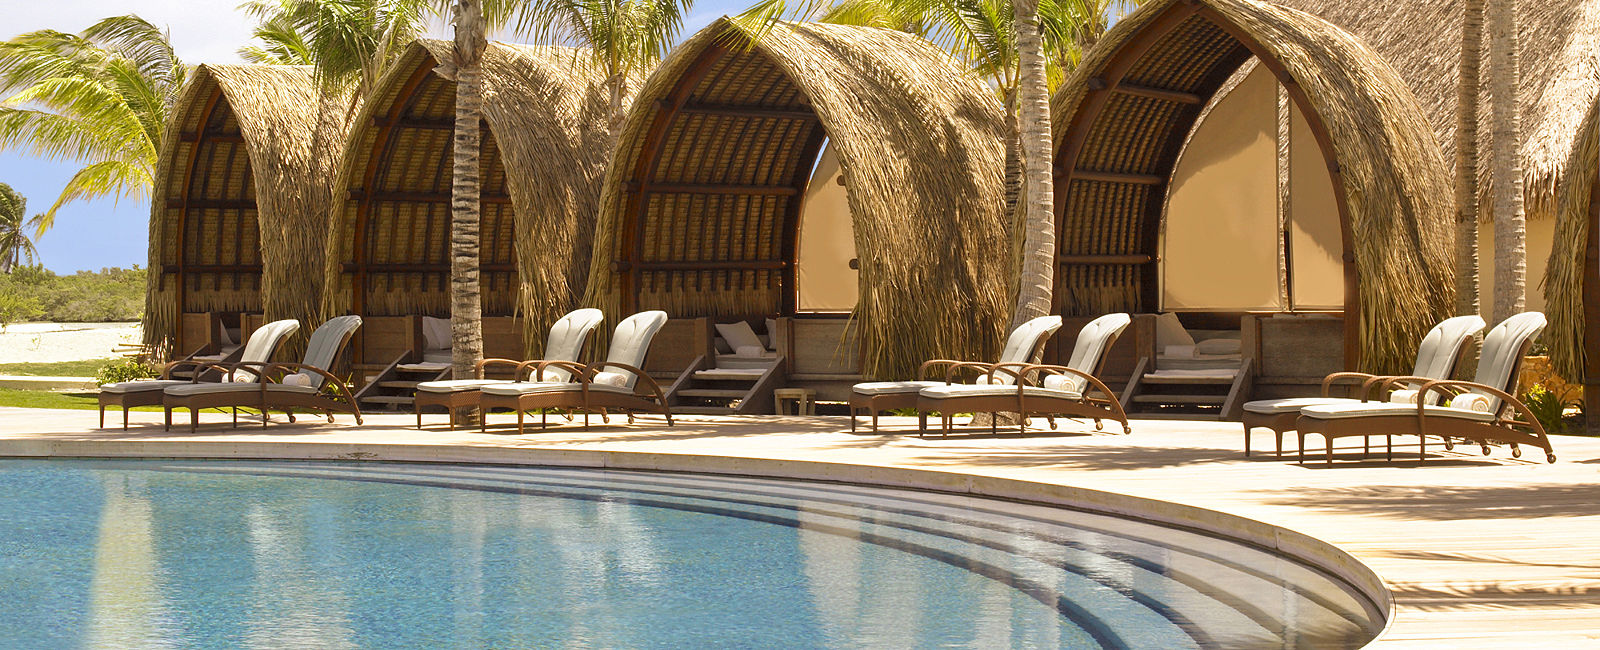 HOTEL ANGEBOTE
 Four Seasons Resort Bora Bora: 4. Nacht gratis 
